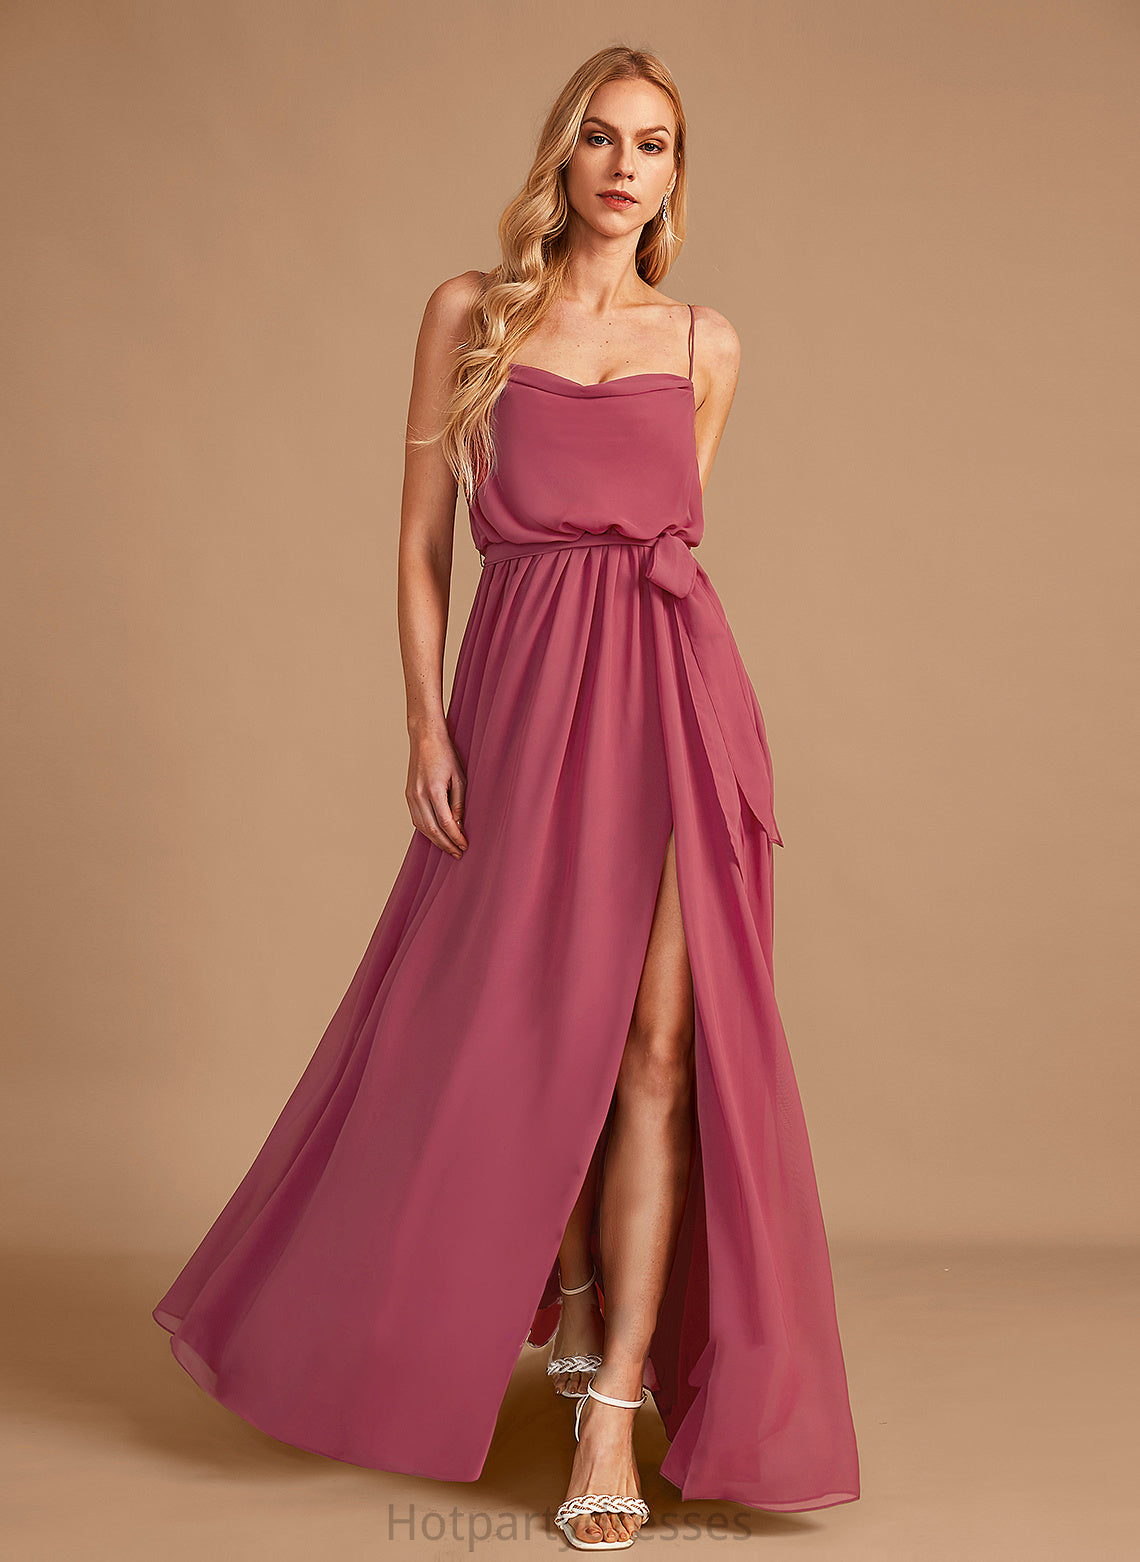 Fabric Silhouette Embellishment CowlNeck Floor-Length A-Line Ruffle Neckline SplitFront Length Lainey Sleeveless Bridesmaid Dresses